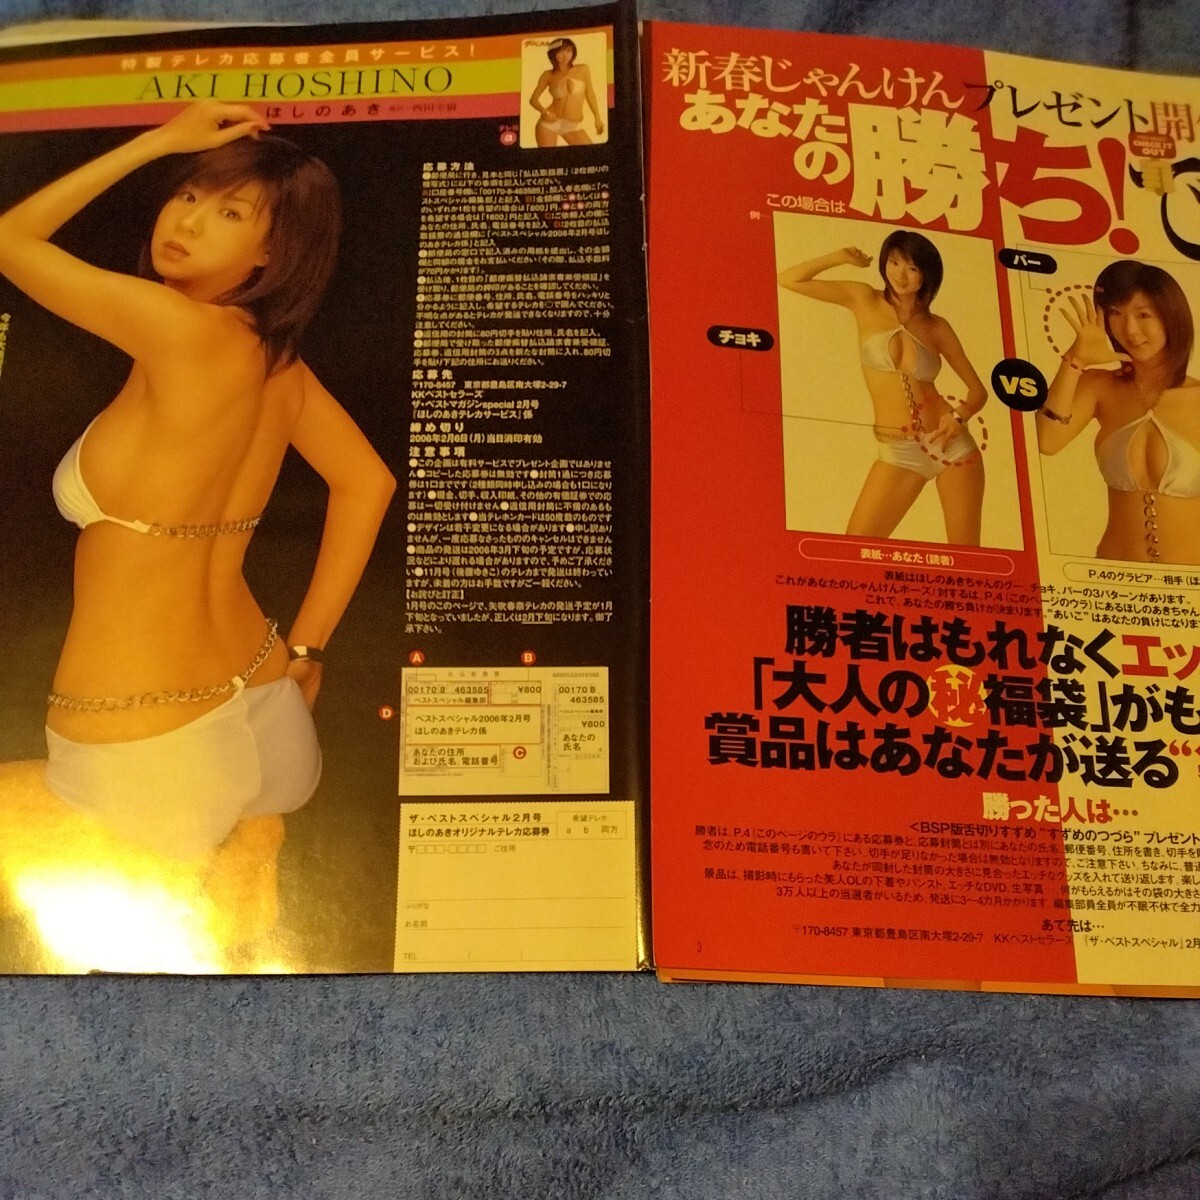  Hoshino Aki 2006 год бикини Ran Jerry порез вытащенный 8 страница 2fp